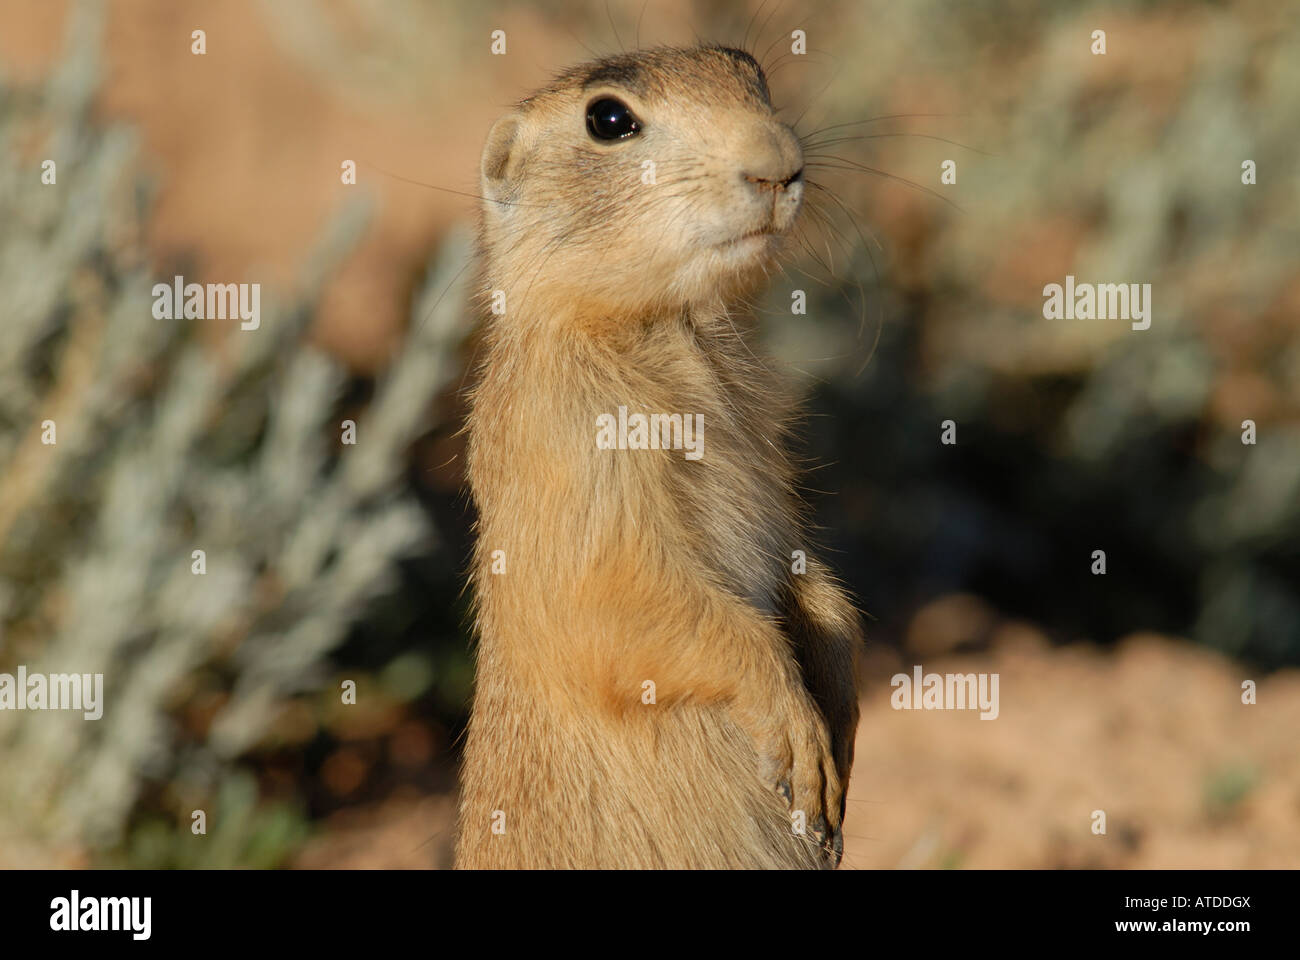 Stock photo closeup profile of a young Utah prairie dog. Stock Photo